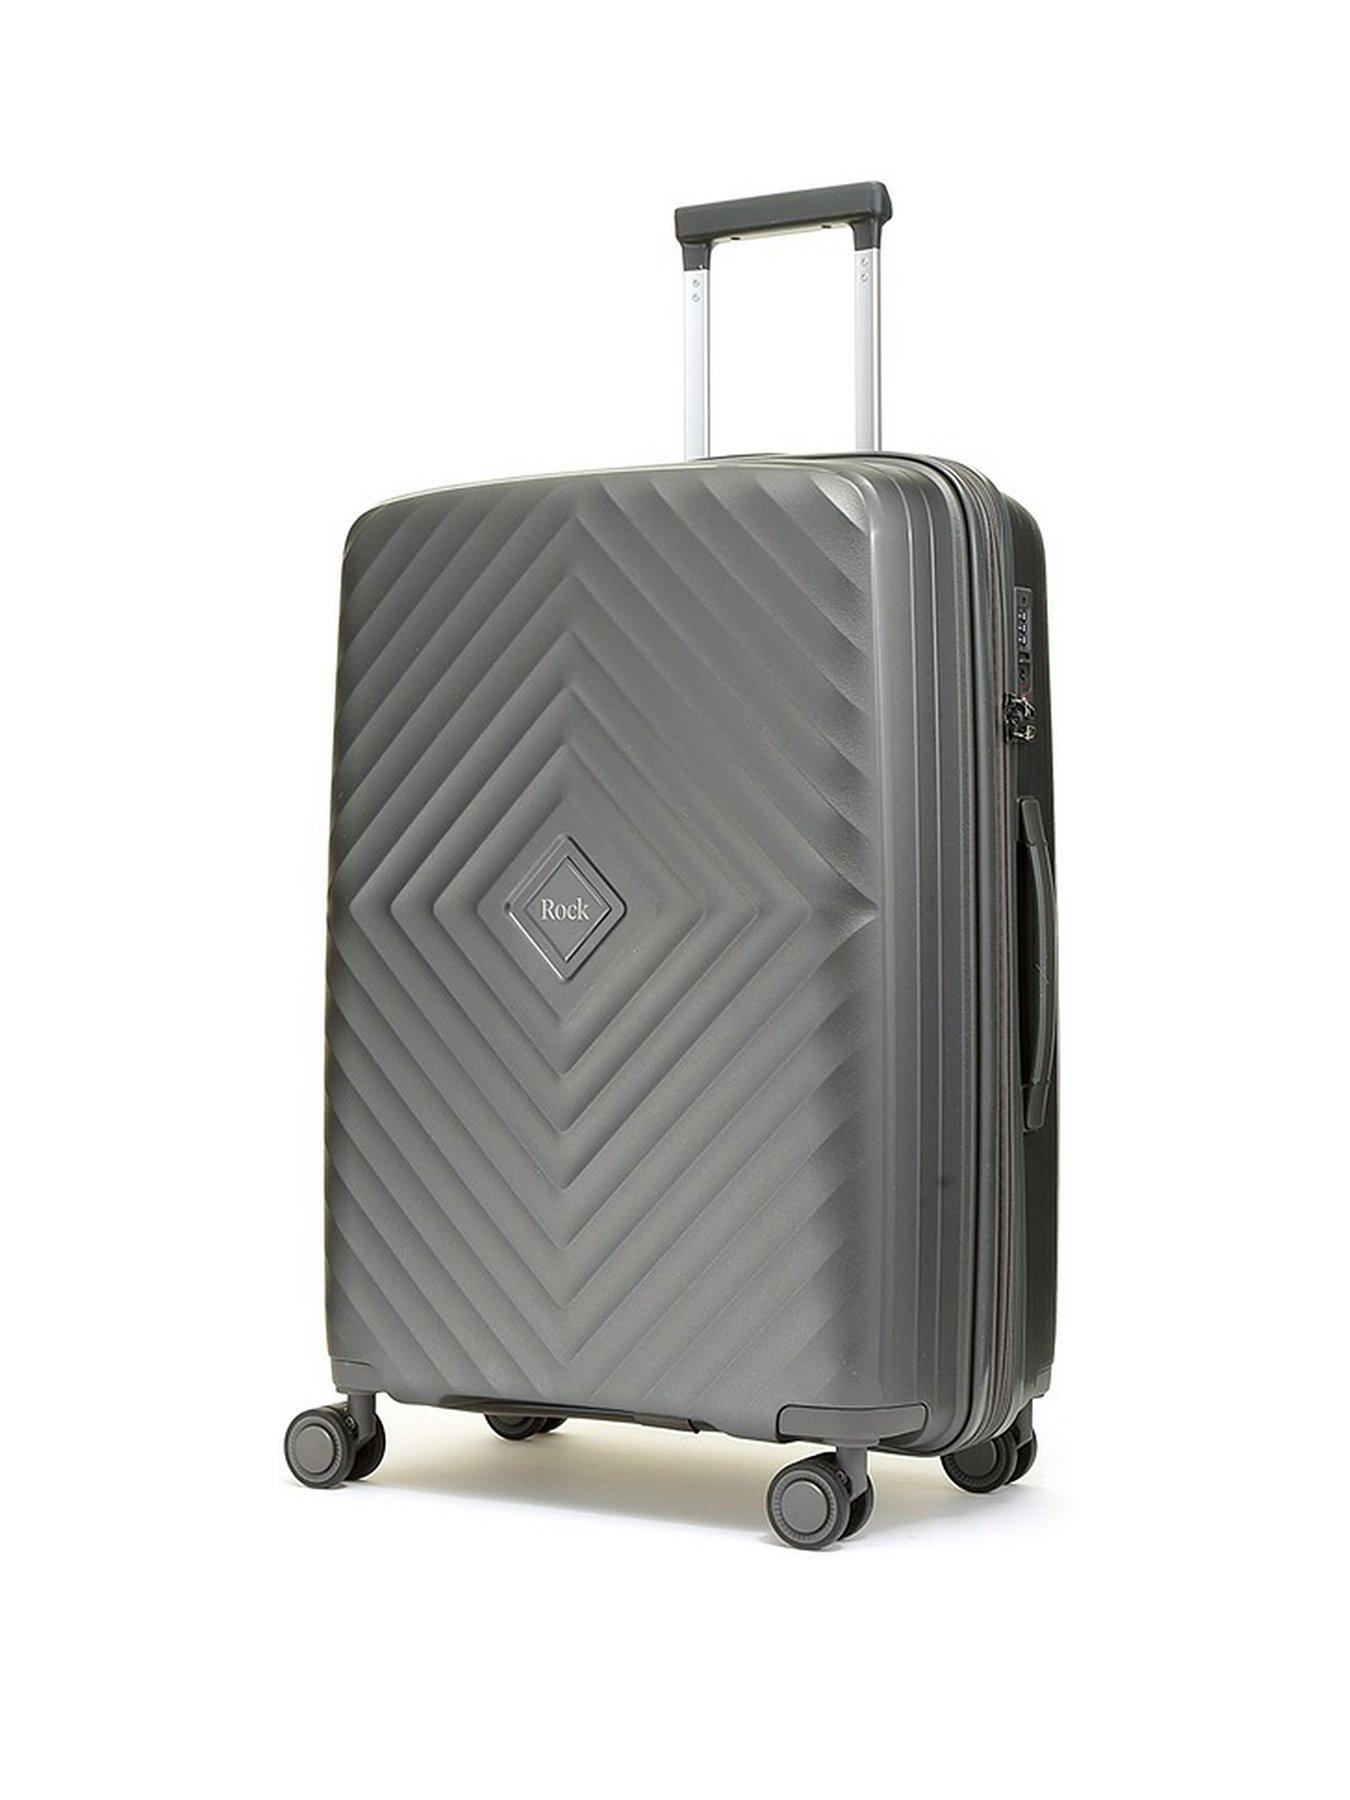 Rock Luggage Infinity 8 Wheel Hardshell Medium Suitcase - Charcoal